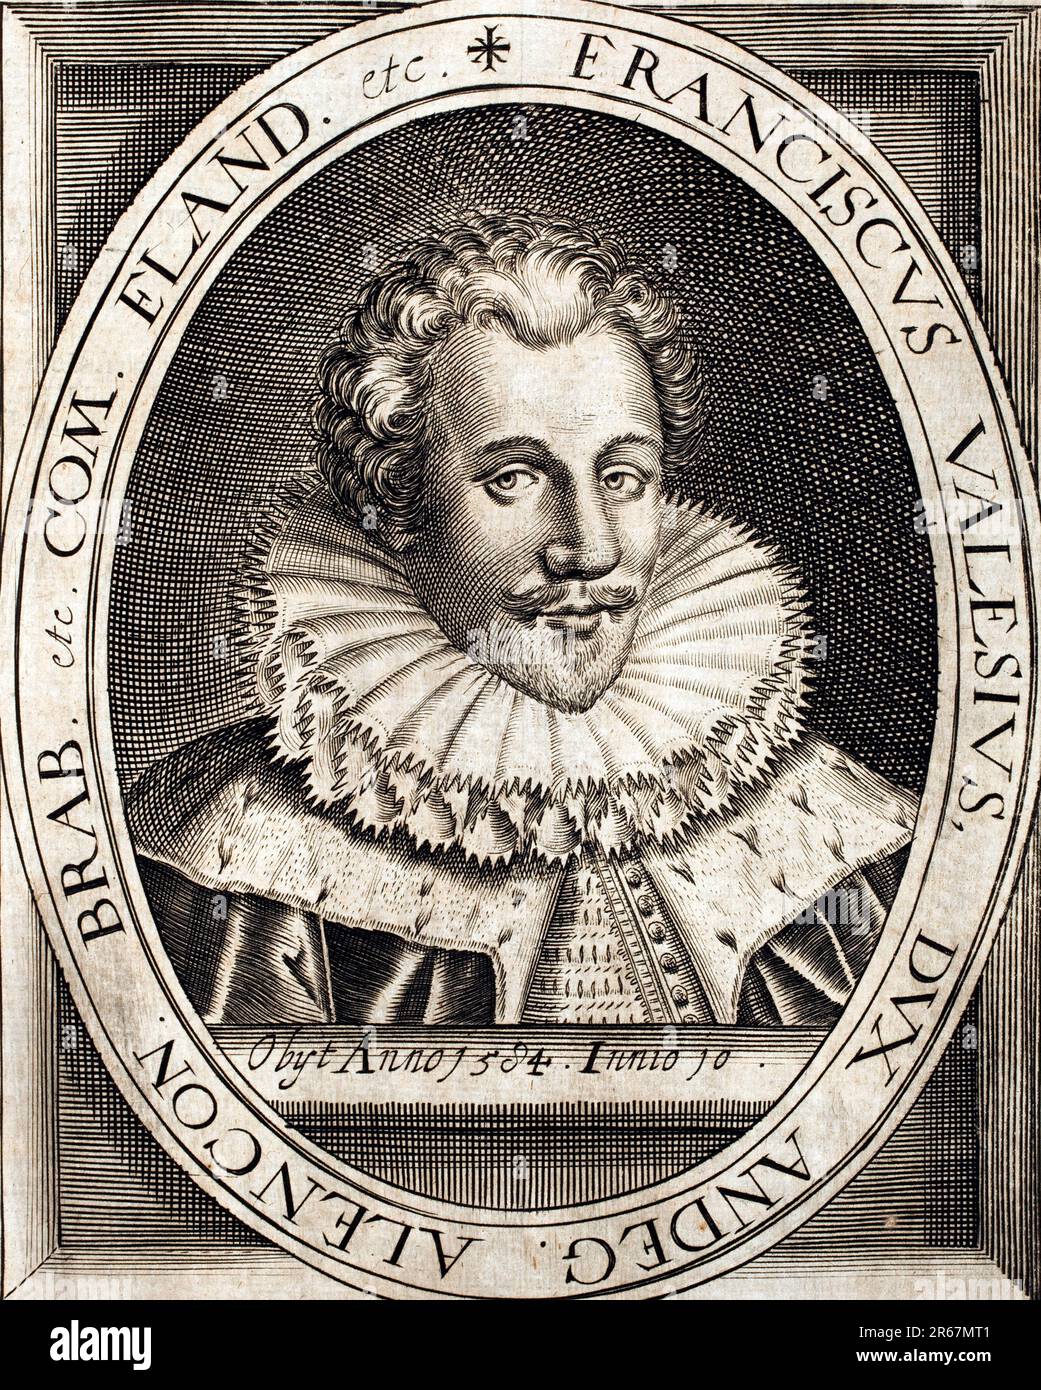 Francesco, Duca d'Angiò, Monsieur Francesco, Duca d'Angiò e Alenca (1555 – 1584) figlio più giovane del re Enrico II di Francia e di Caterina de' Medici. Foto Stock